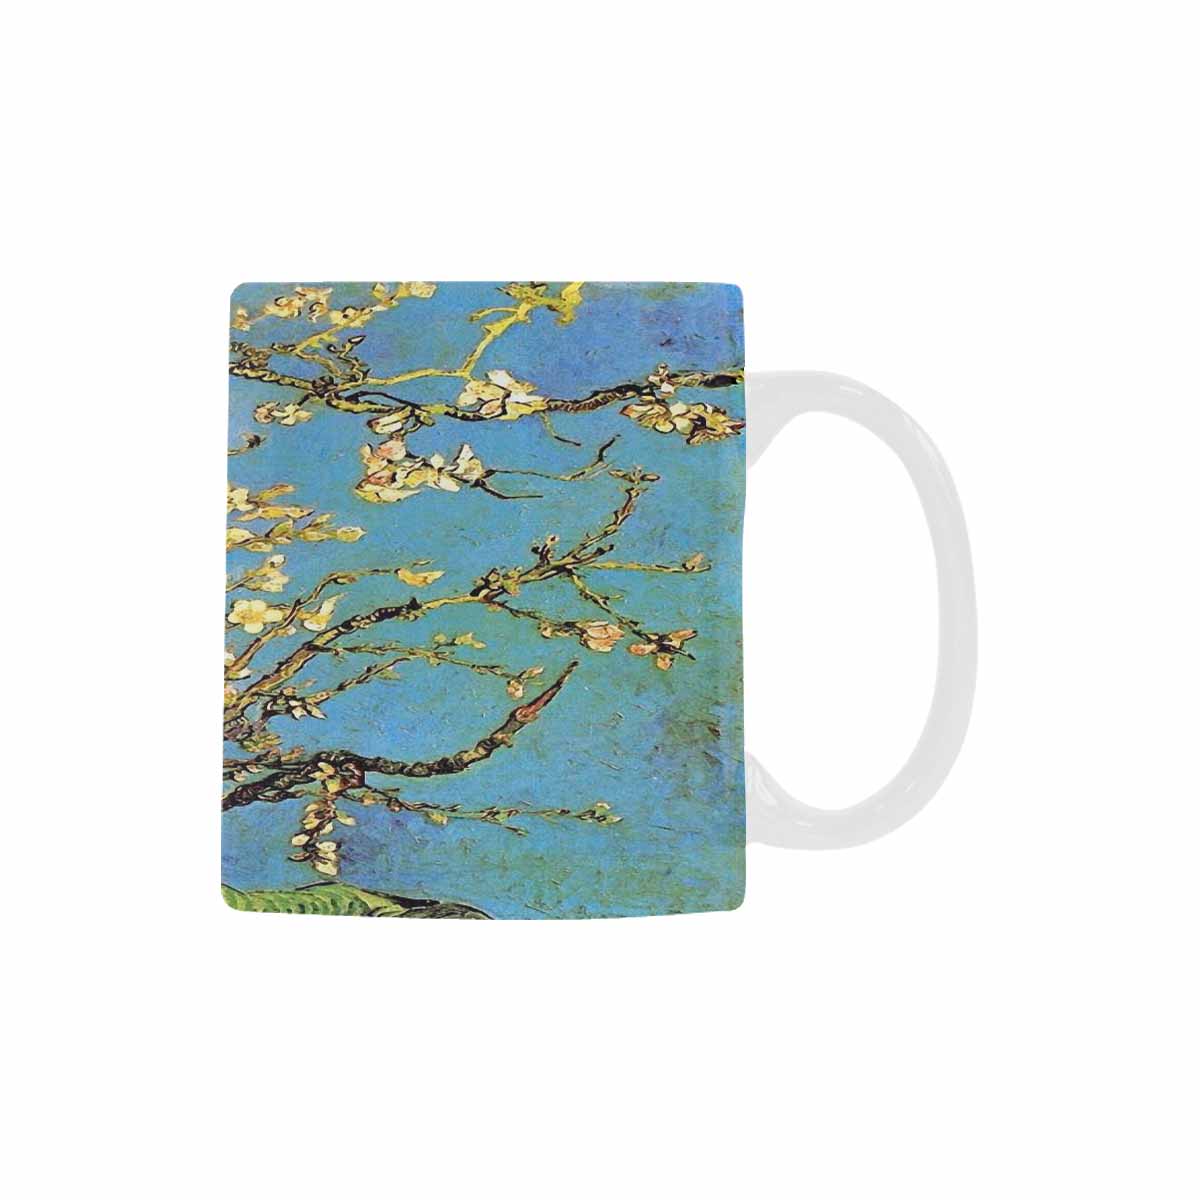 Vintage floral coffee mug or tea cup, Design 20